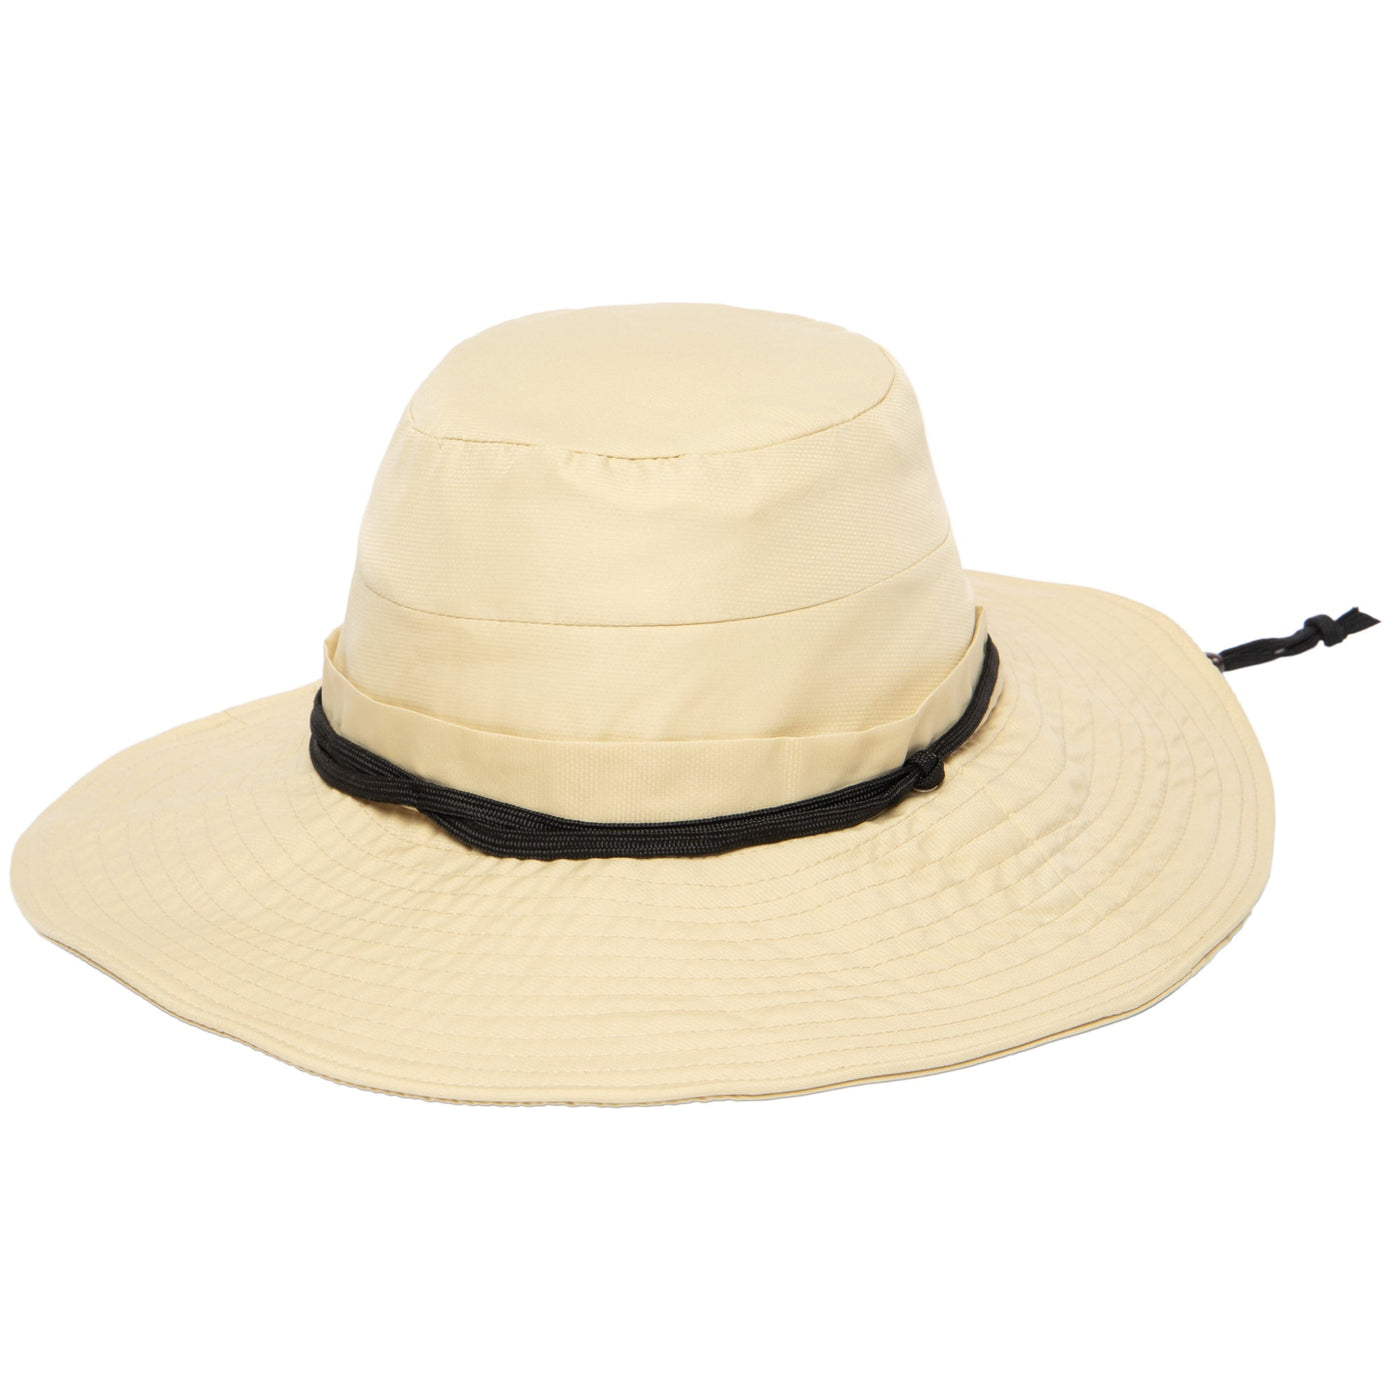 San Diego Hat Company Women's Active Sun Brim Hat Tan OS, Size: One size, Beige